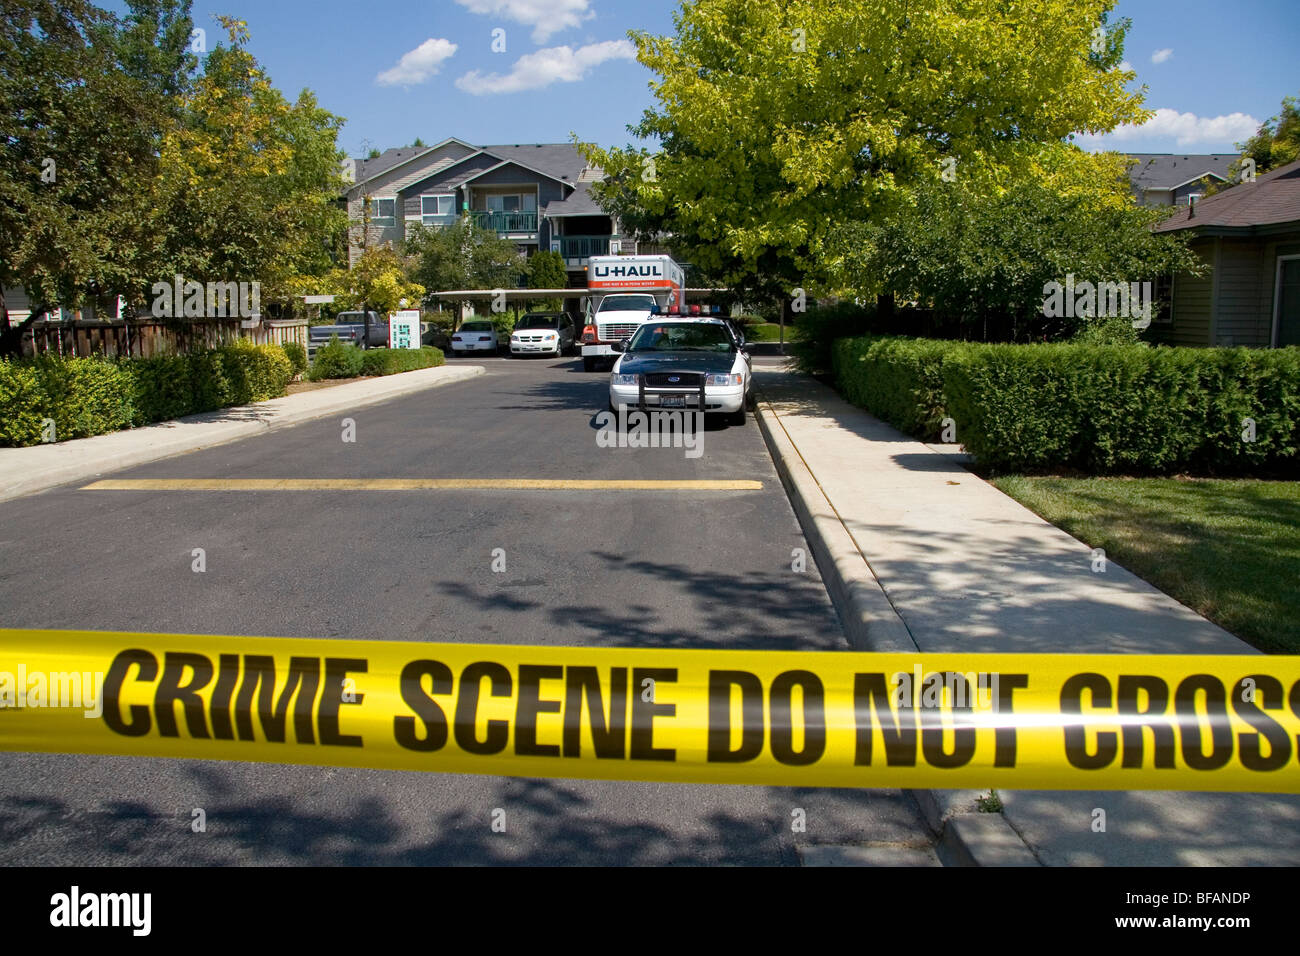 Police crime scene tape warning against entering a crime area in Boise, Idaho, USA. Stock Photo